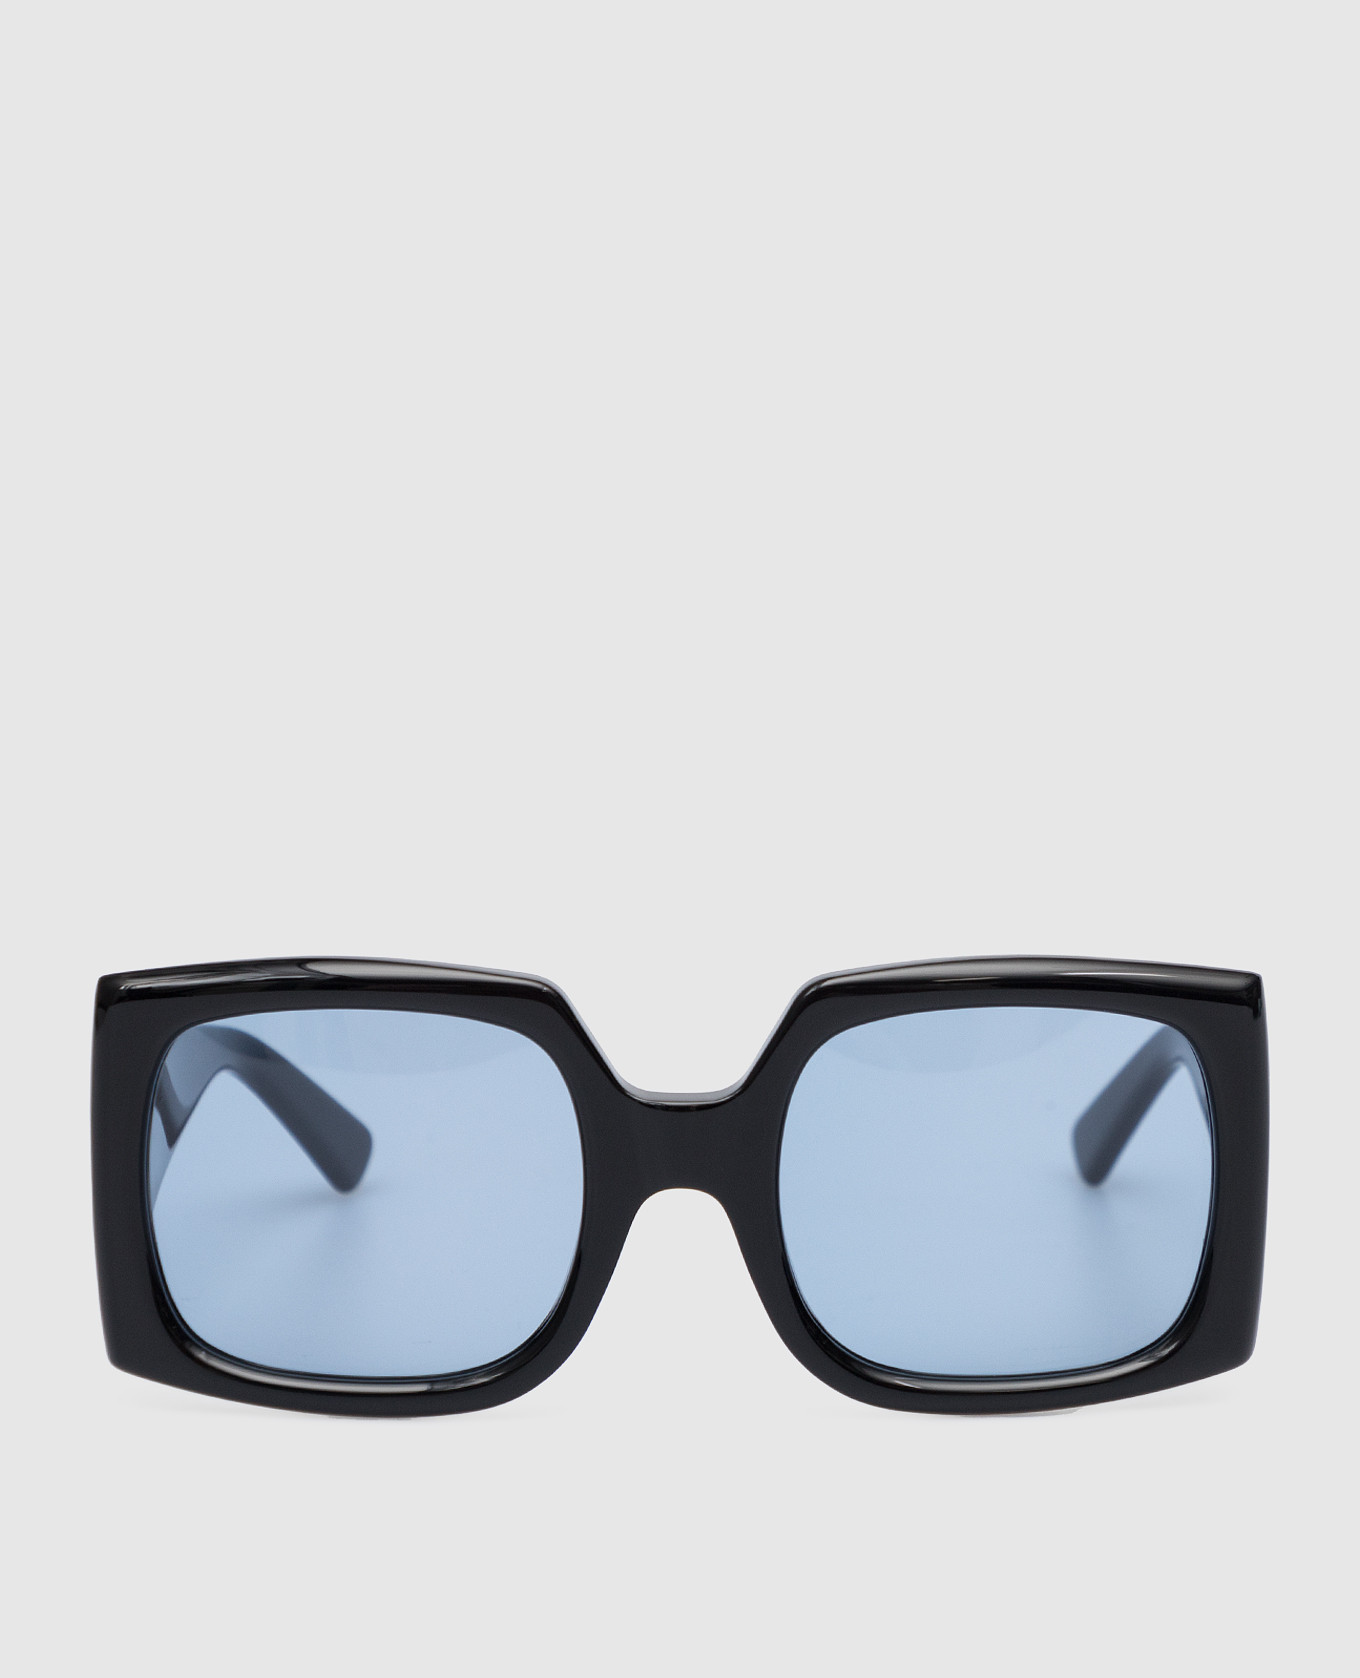 Black Fhonix sunglasses with textured logo